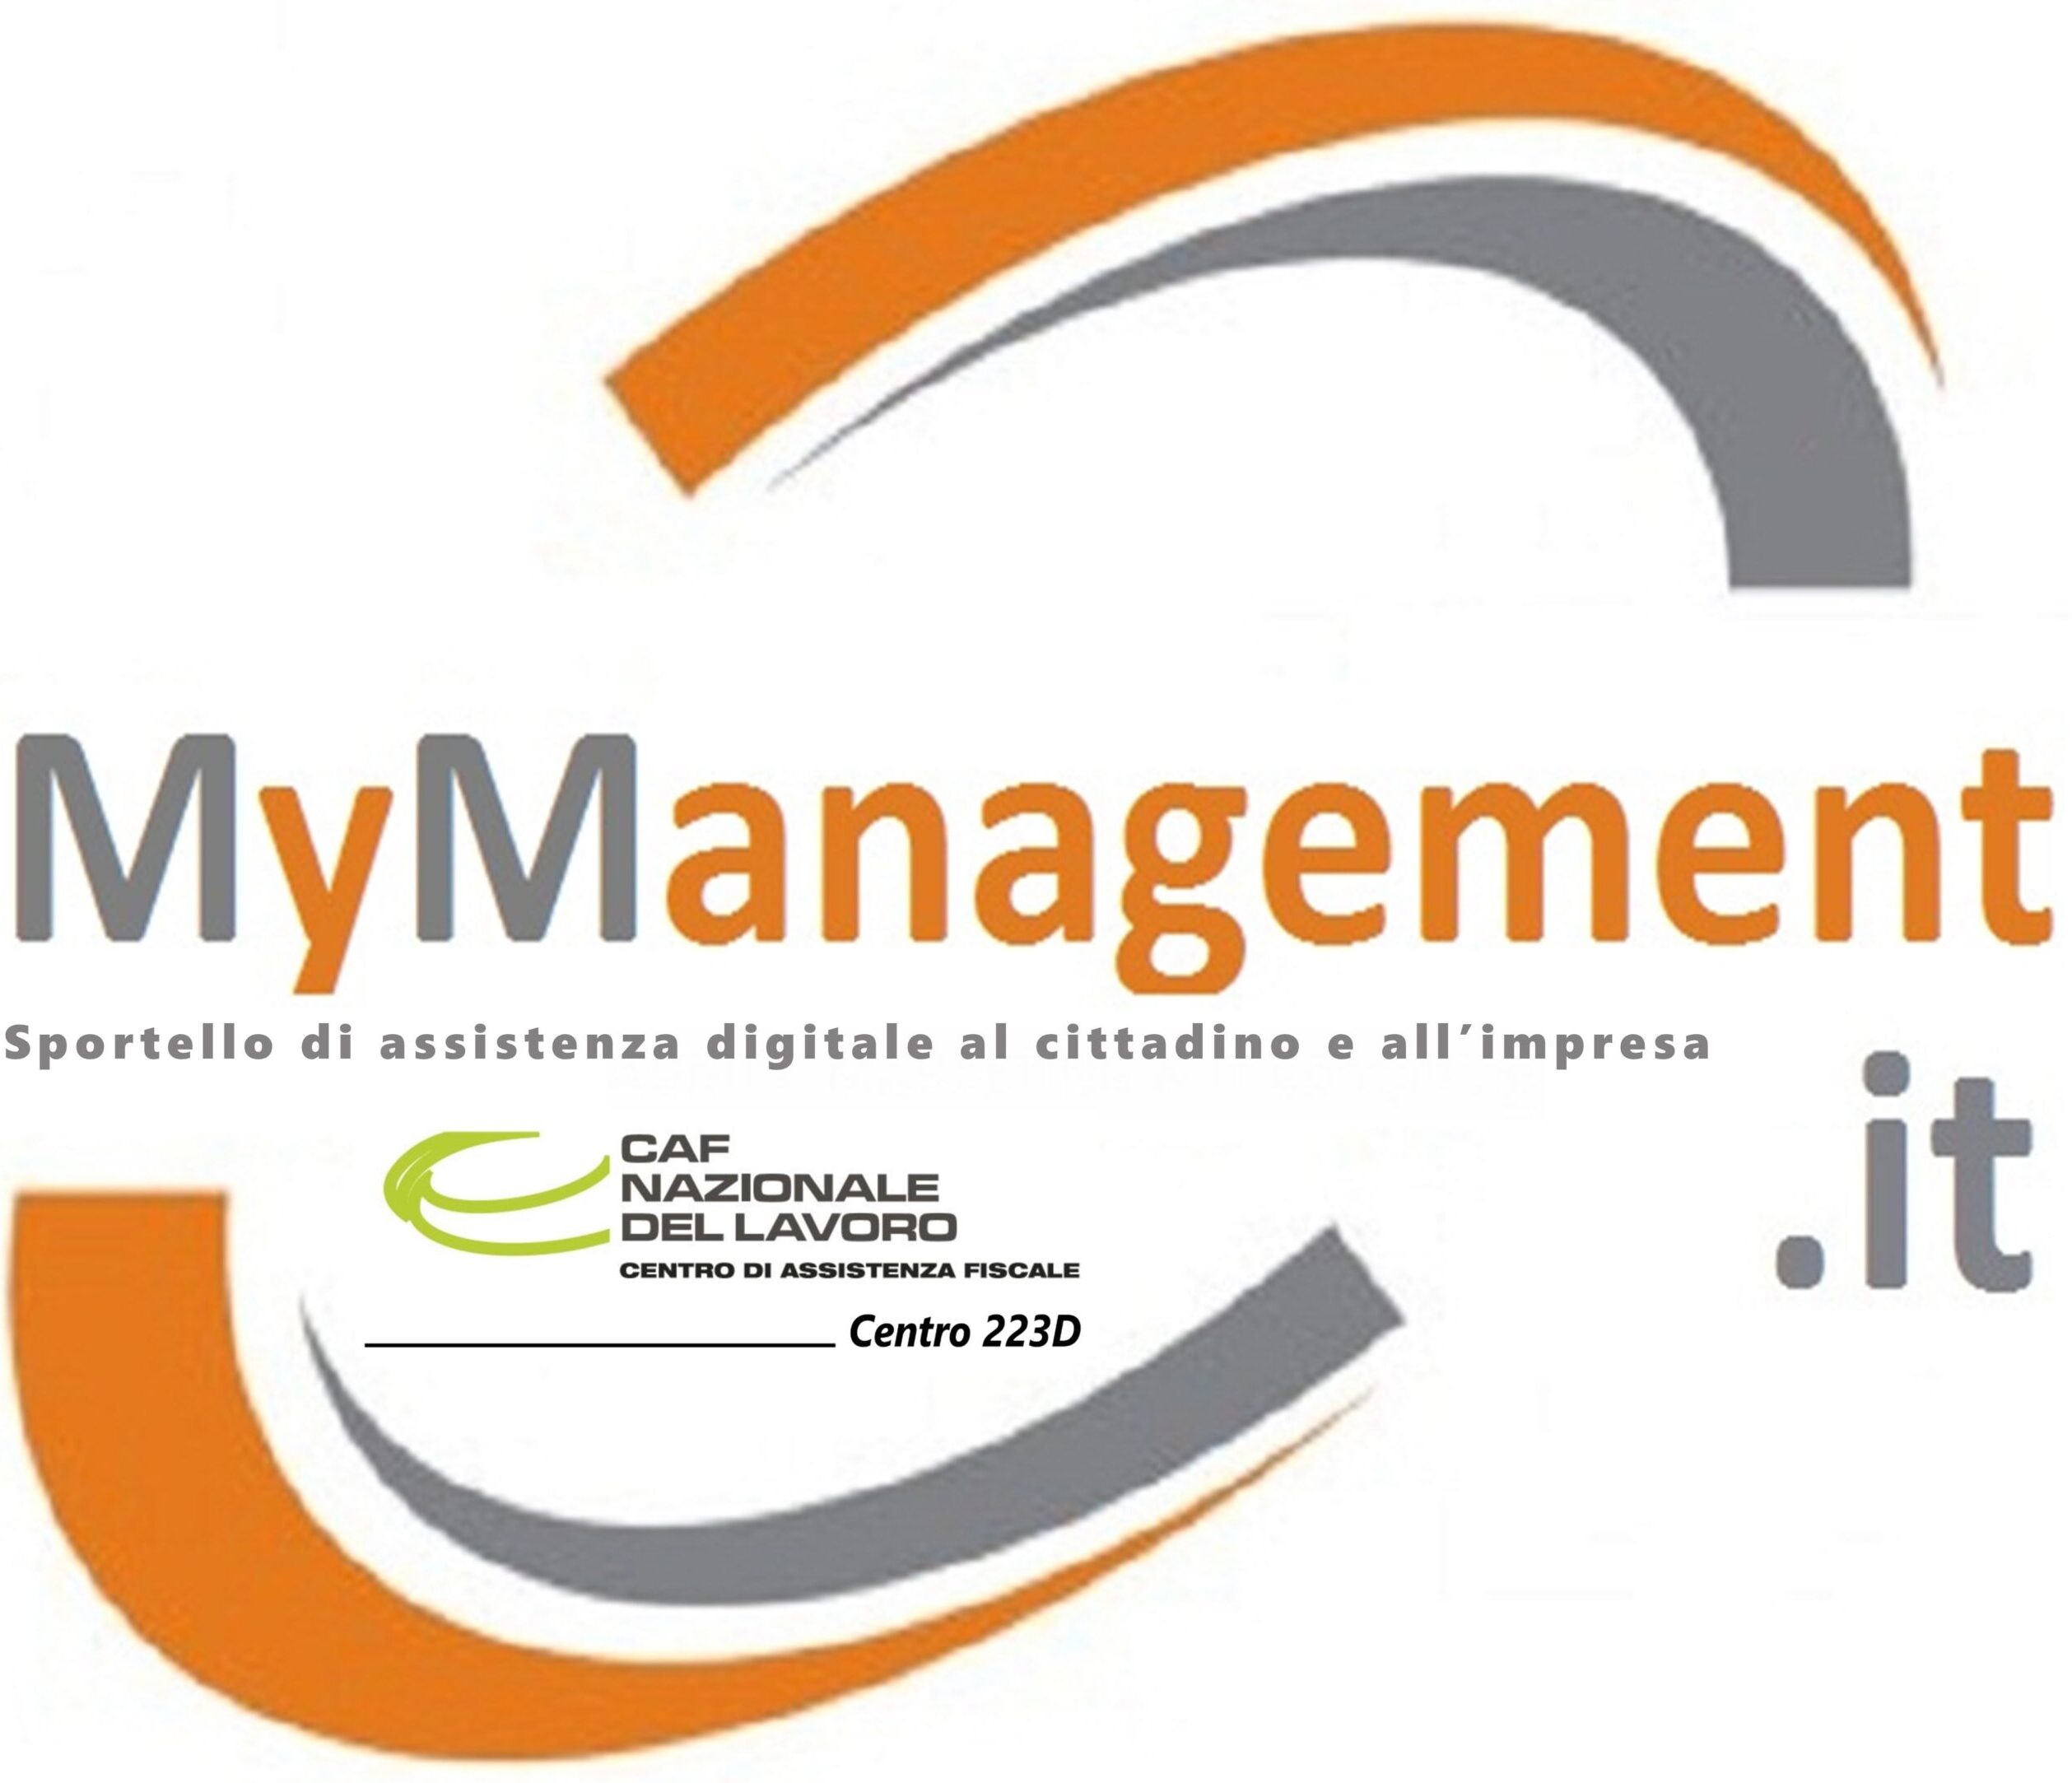 My Management – Caf, contabilità, Privacy e consulenza associazioni a Catania e Valguarnera